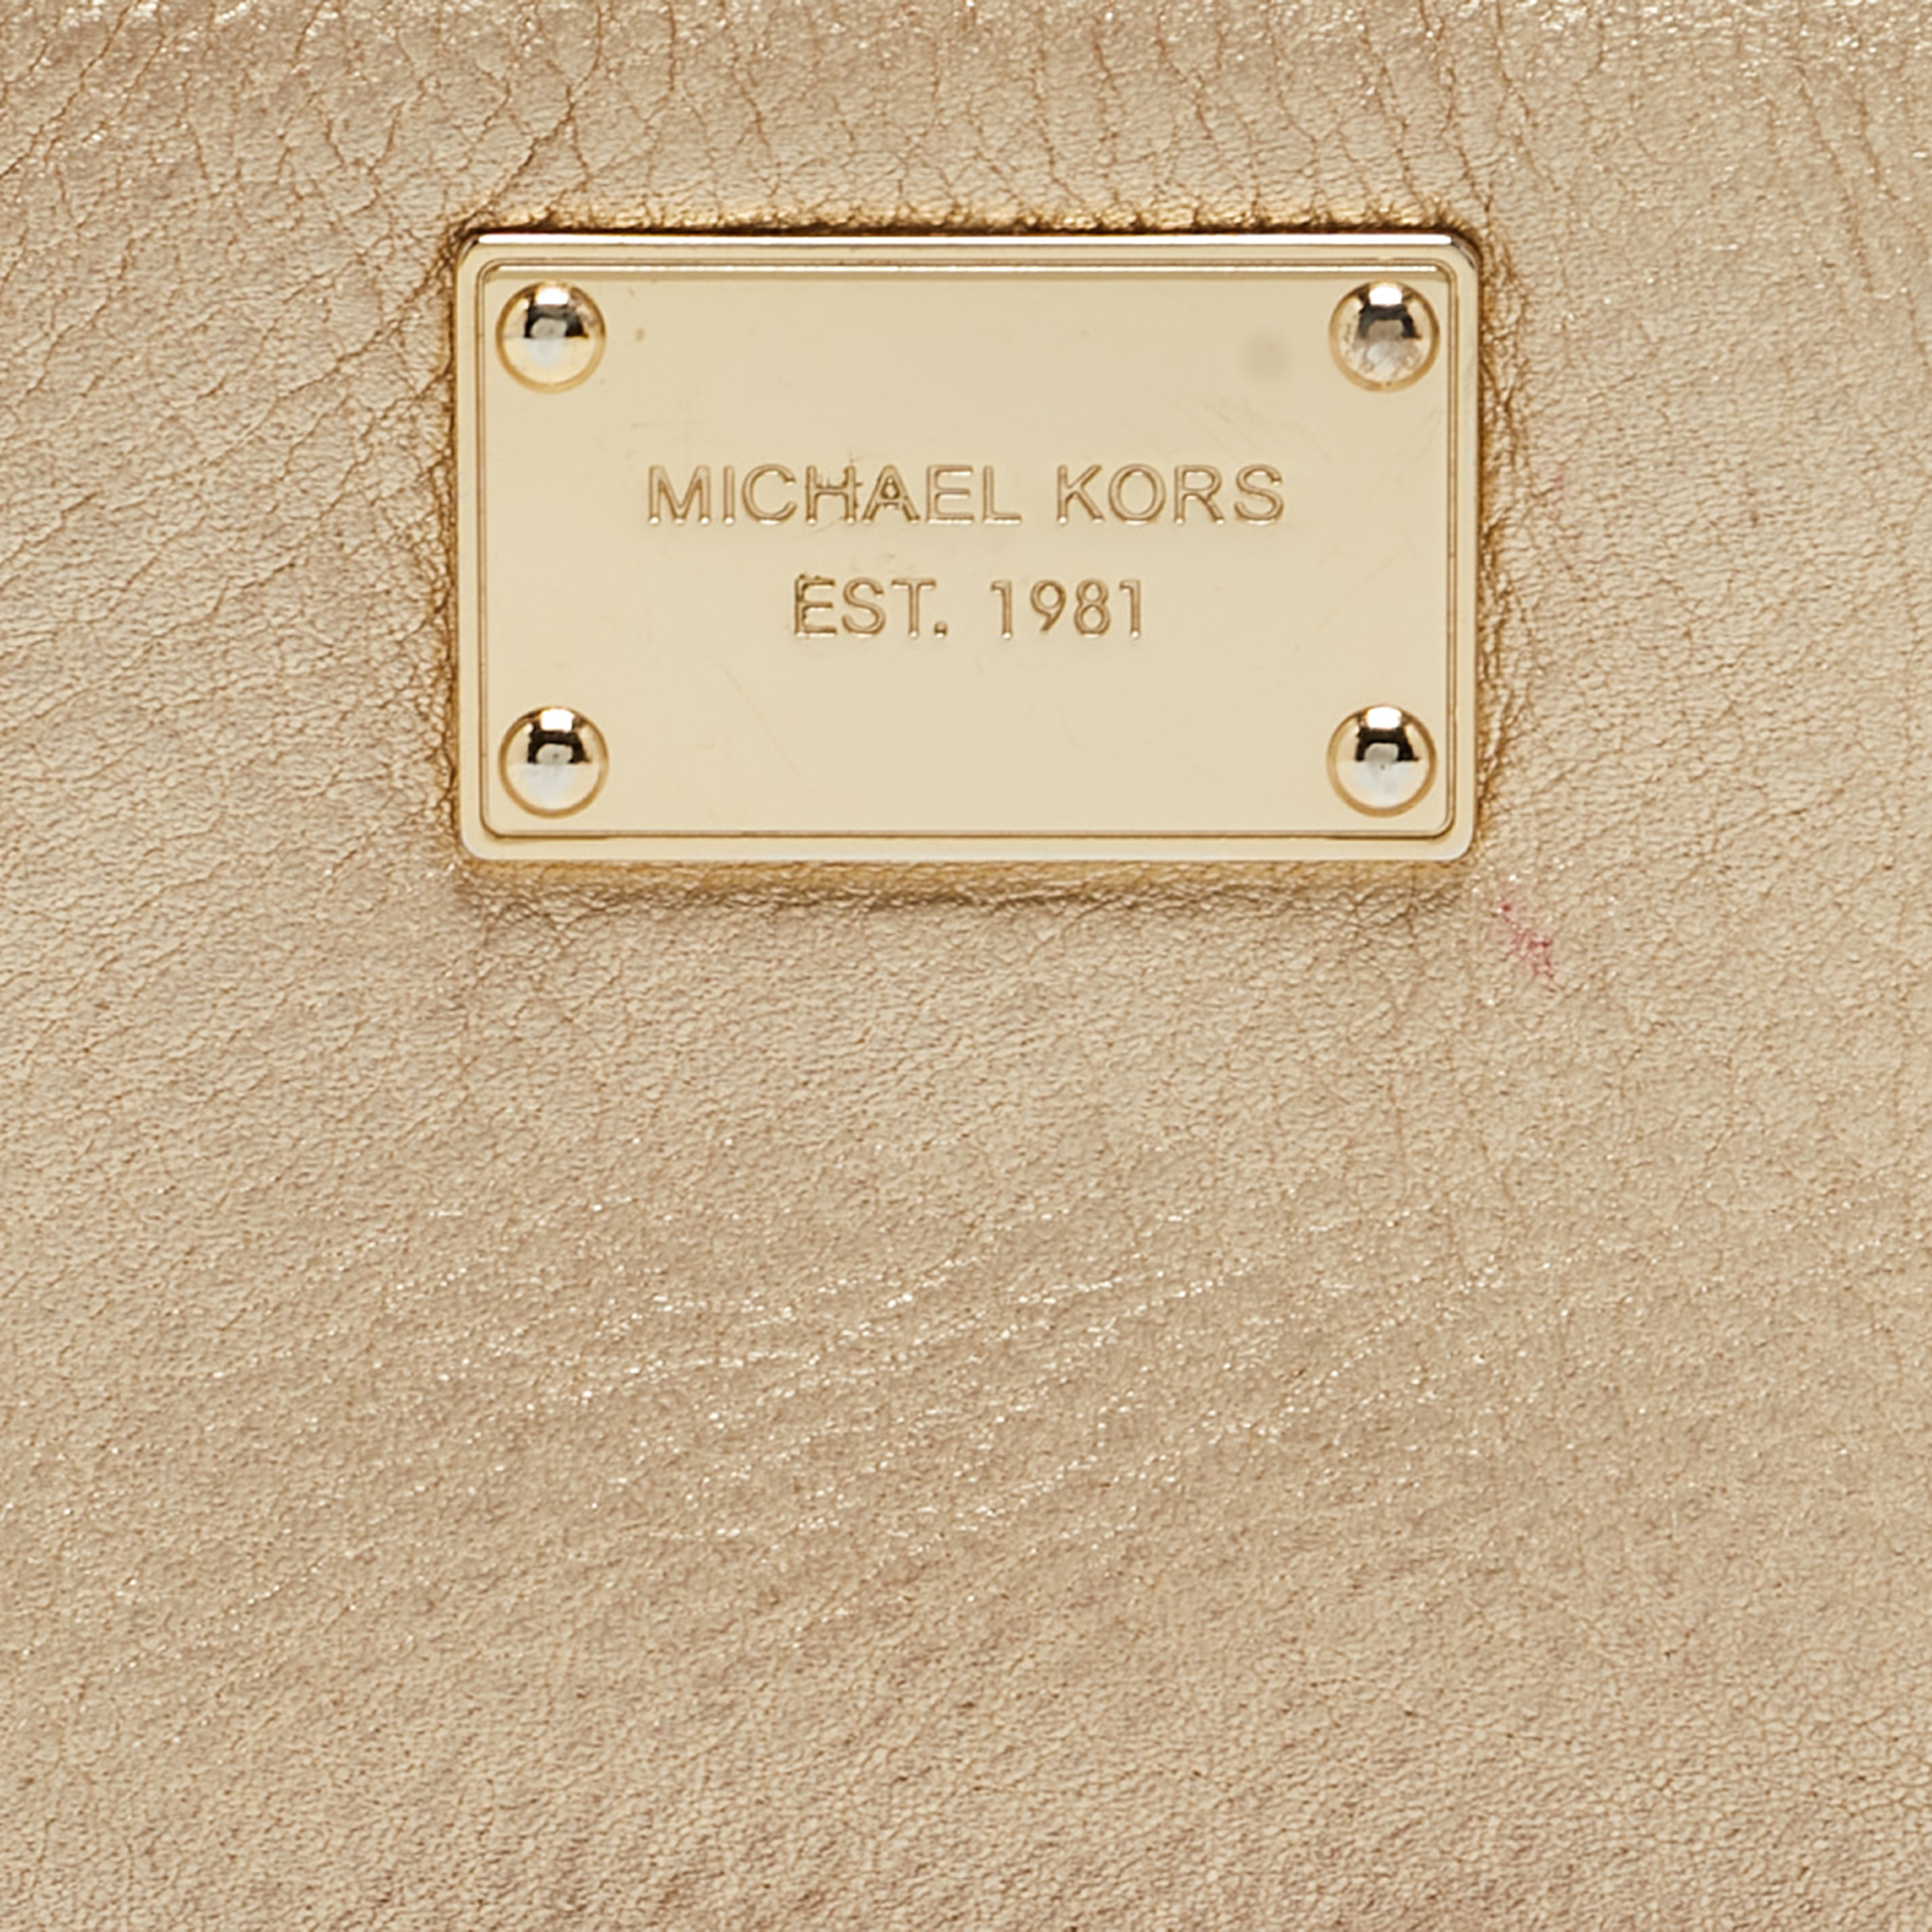 Michael Kors Gold Leather Jet Set Zip Around Continental Wallet